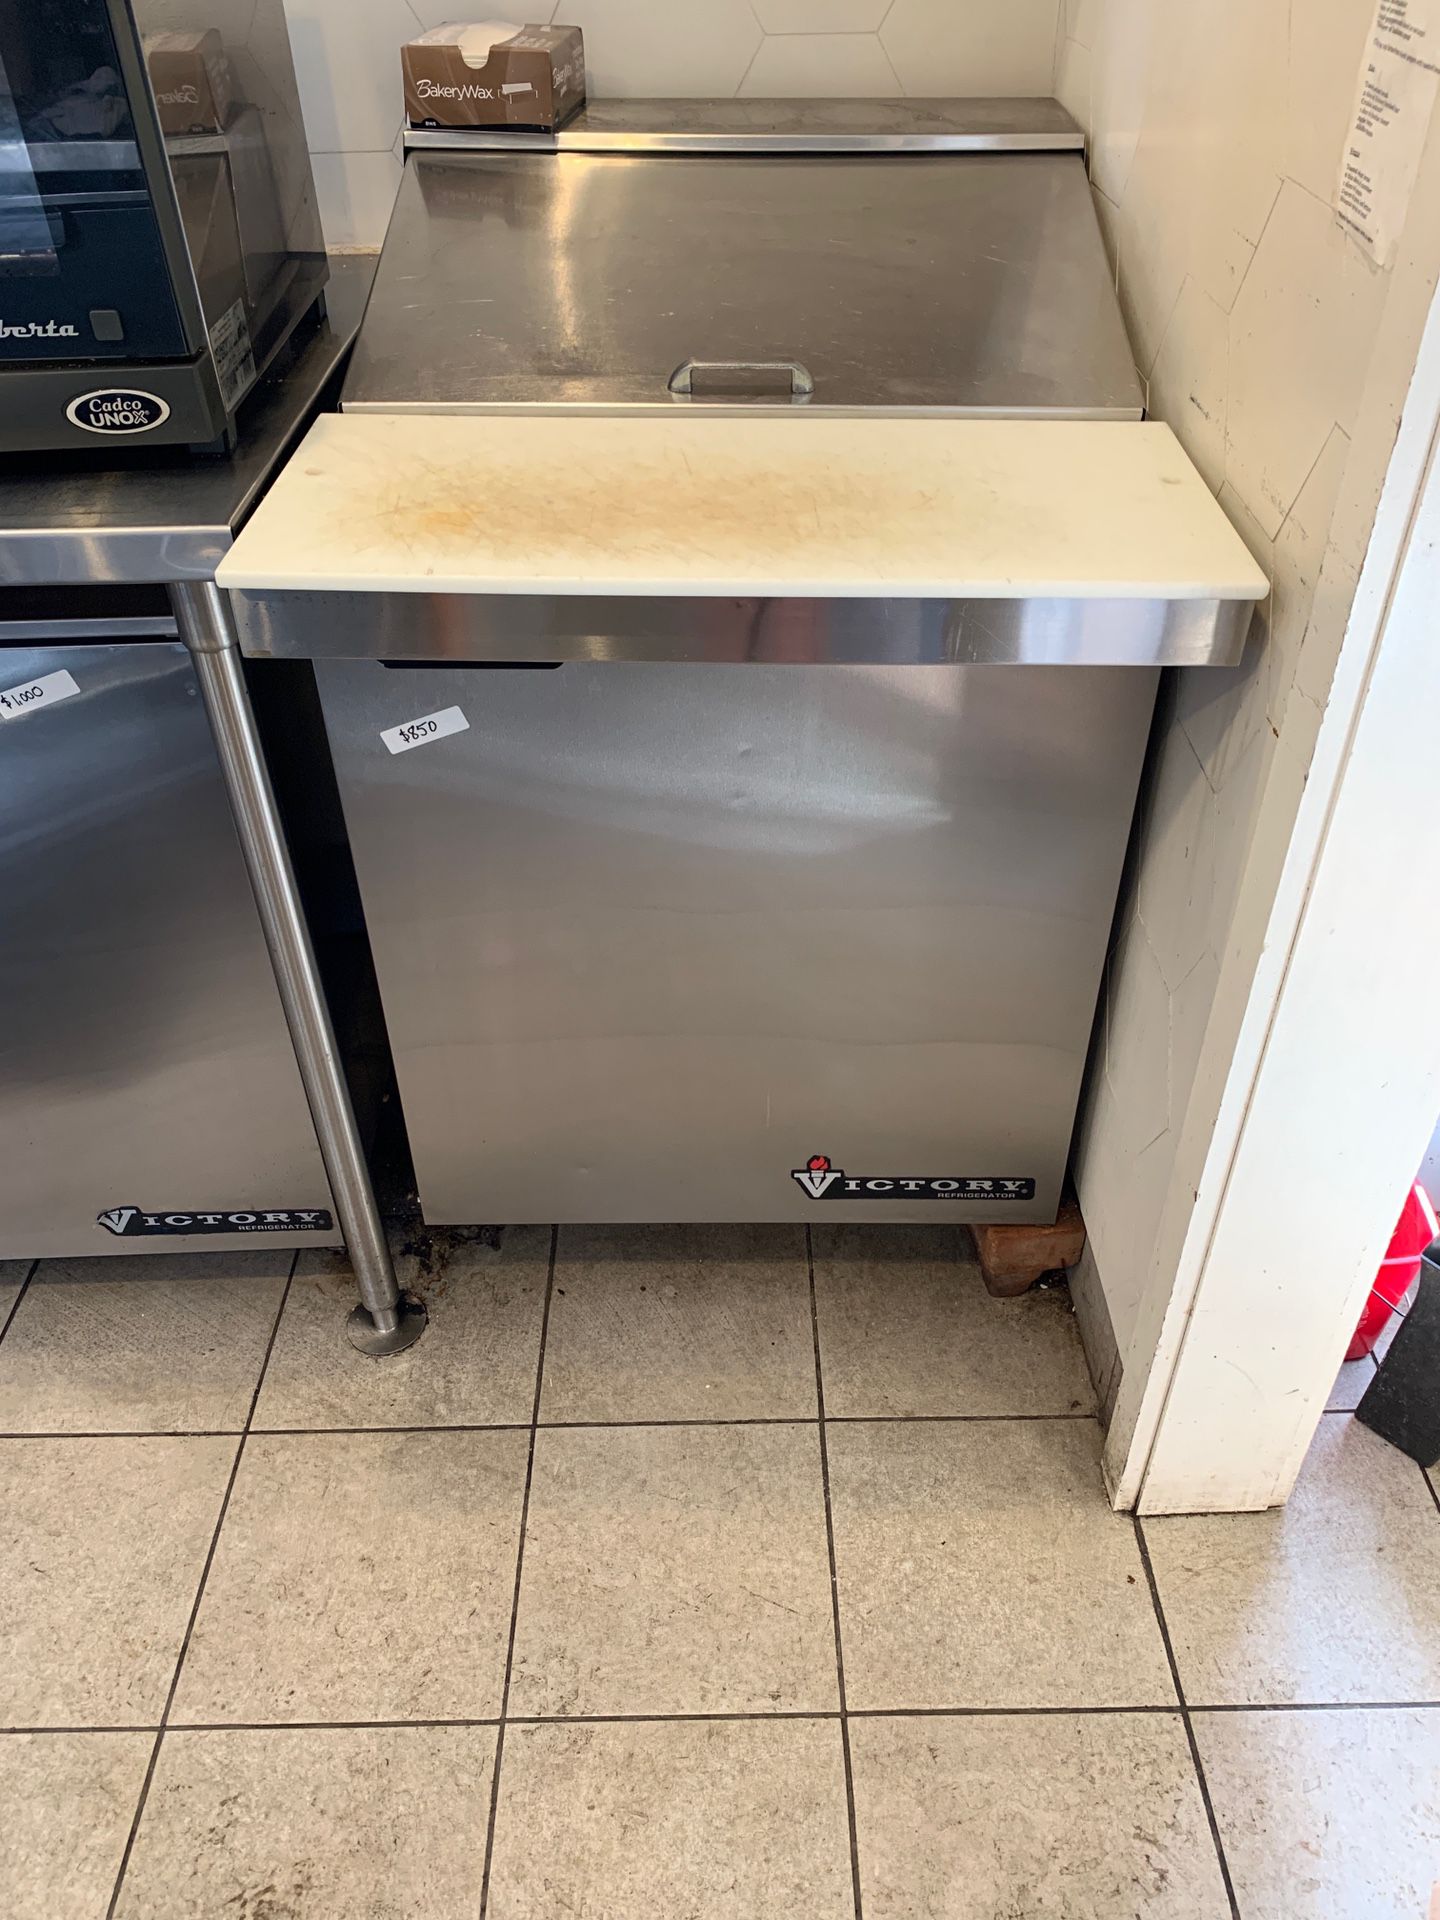 Prep station - includes fridge underneath